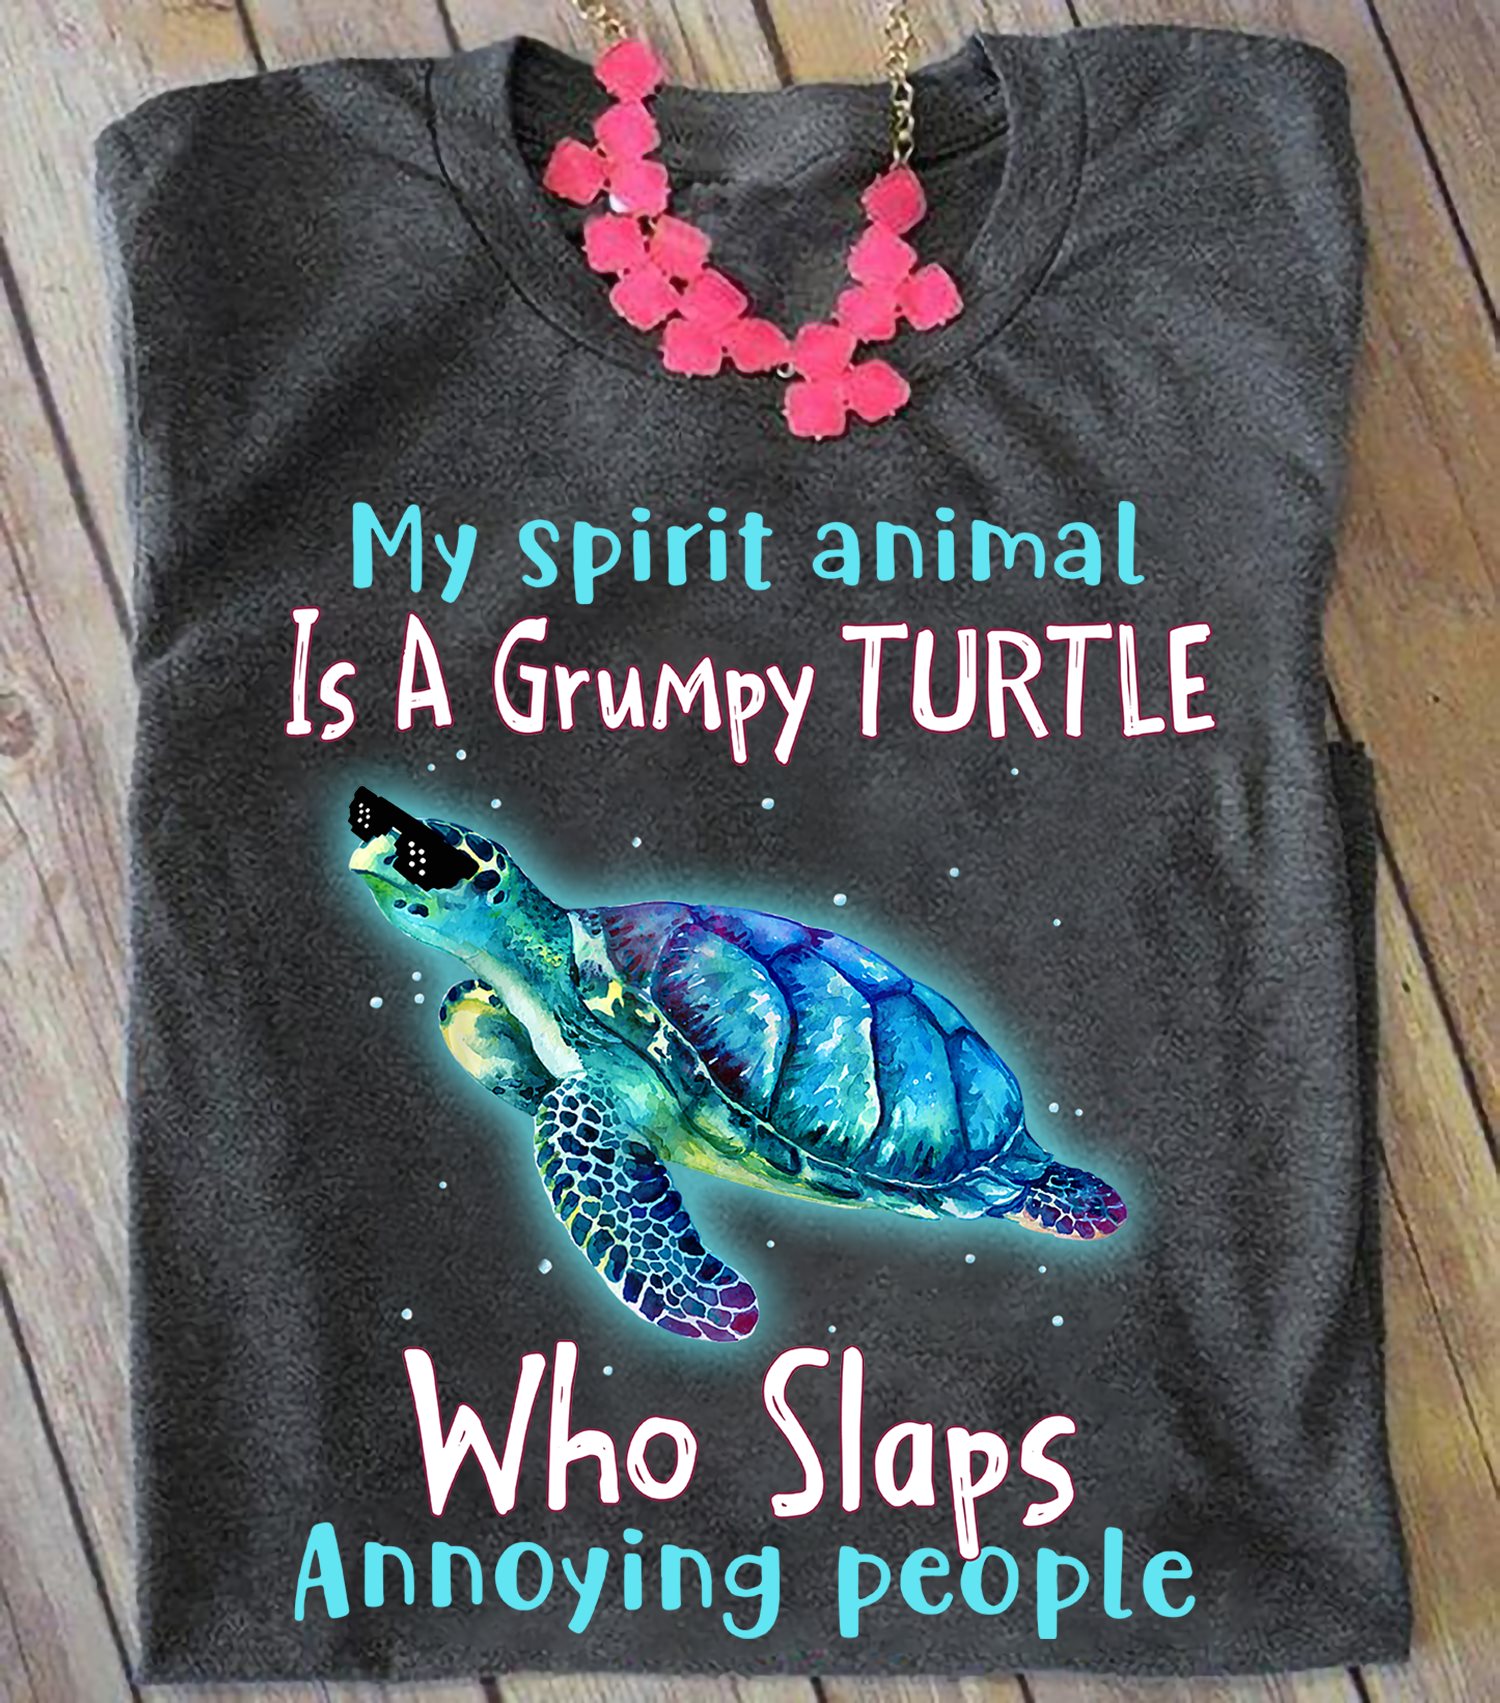 My spirit animal is a grumpy turtle who slaps annoying people